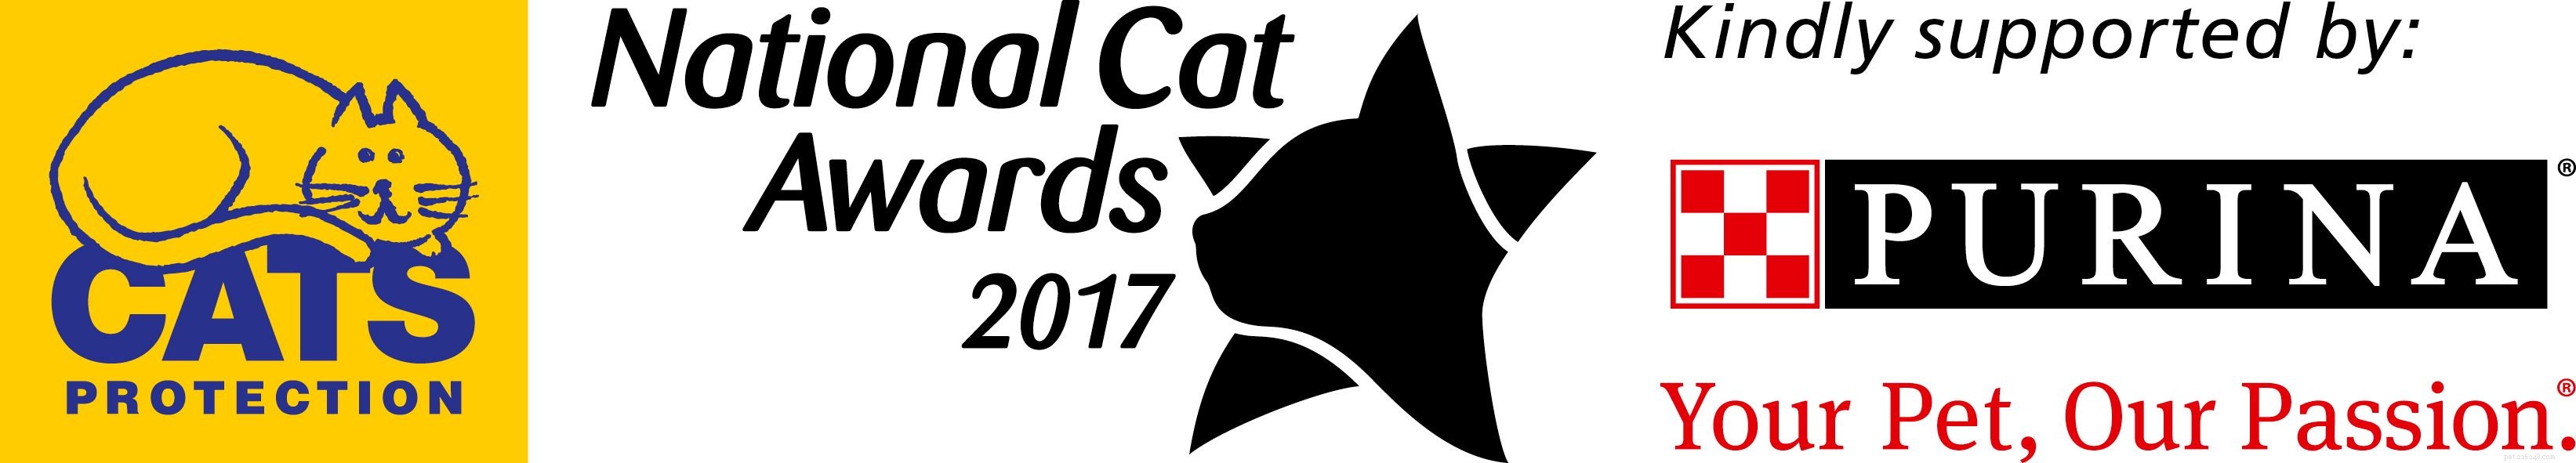 Incontra i finalisti della categoria Most Caring Cat ai National Cat Awards 2017!